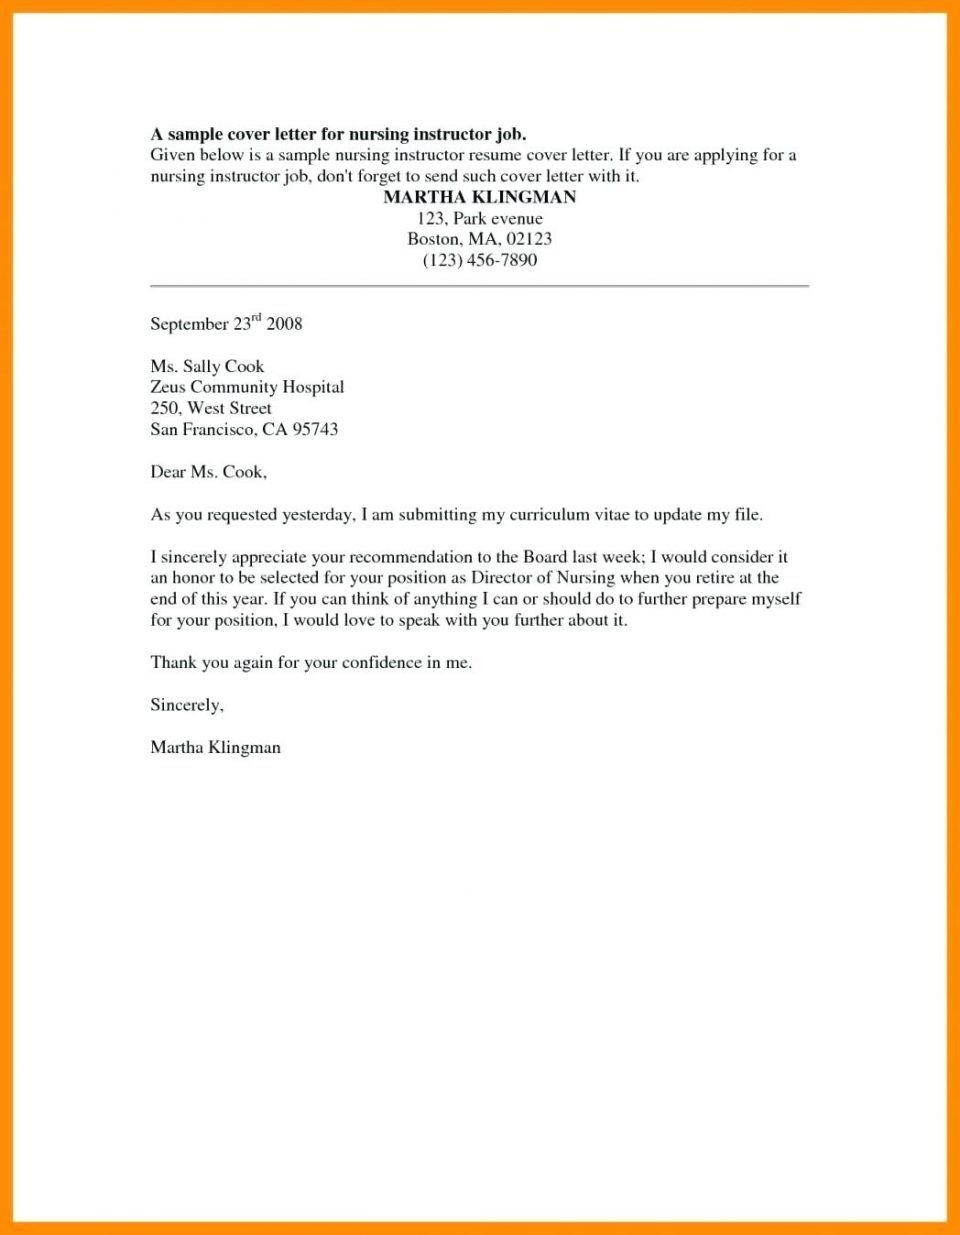 Sample Cover Letter for Nursing Job Resume Cover Letter Mistakes Awesome Nursing Student New Nurse Samples …